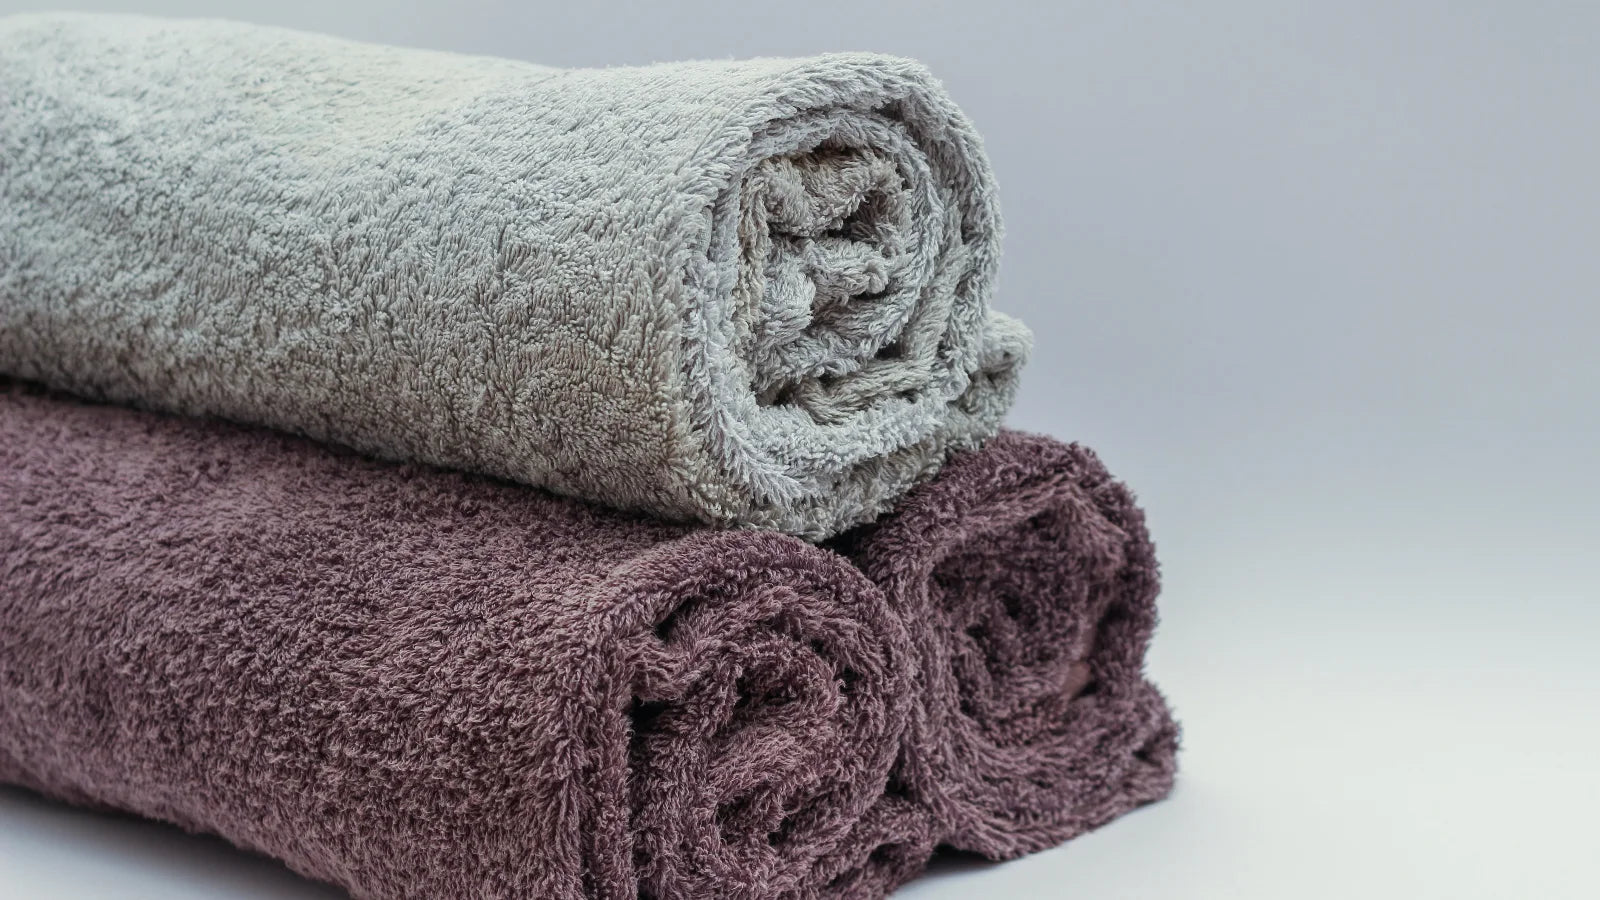 Use a comfortable microfiber towel